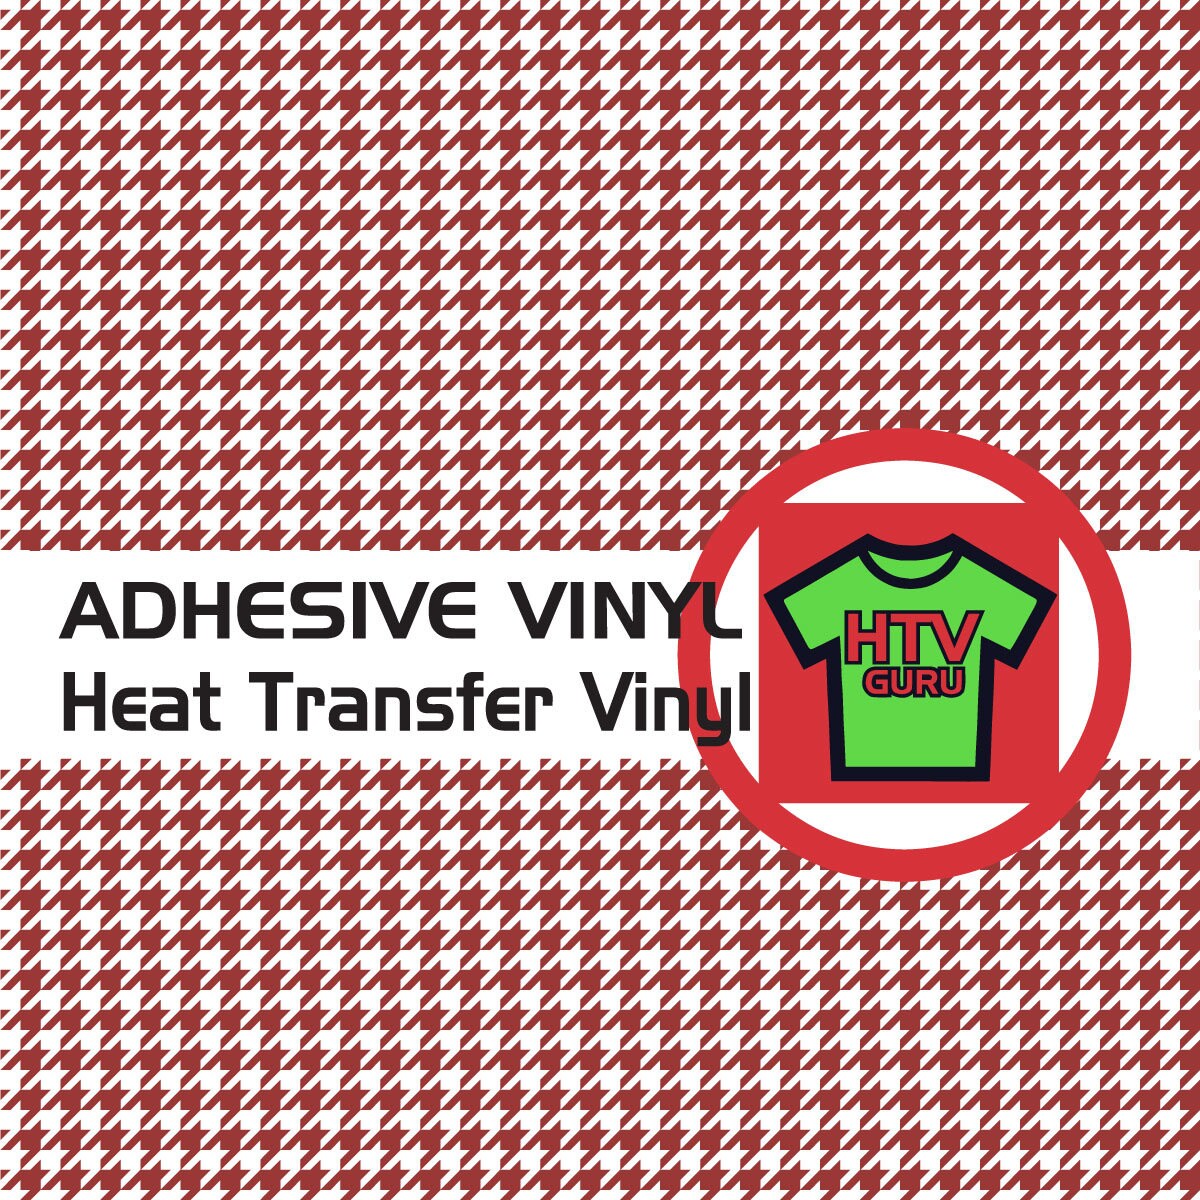 Real Rope Vinyl or HTV, Outdoor Adhesive Vinyl or Heat Transfer Vinyl